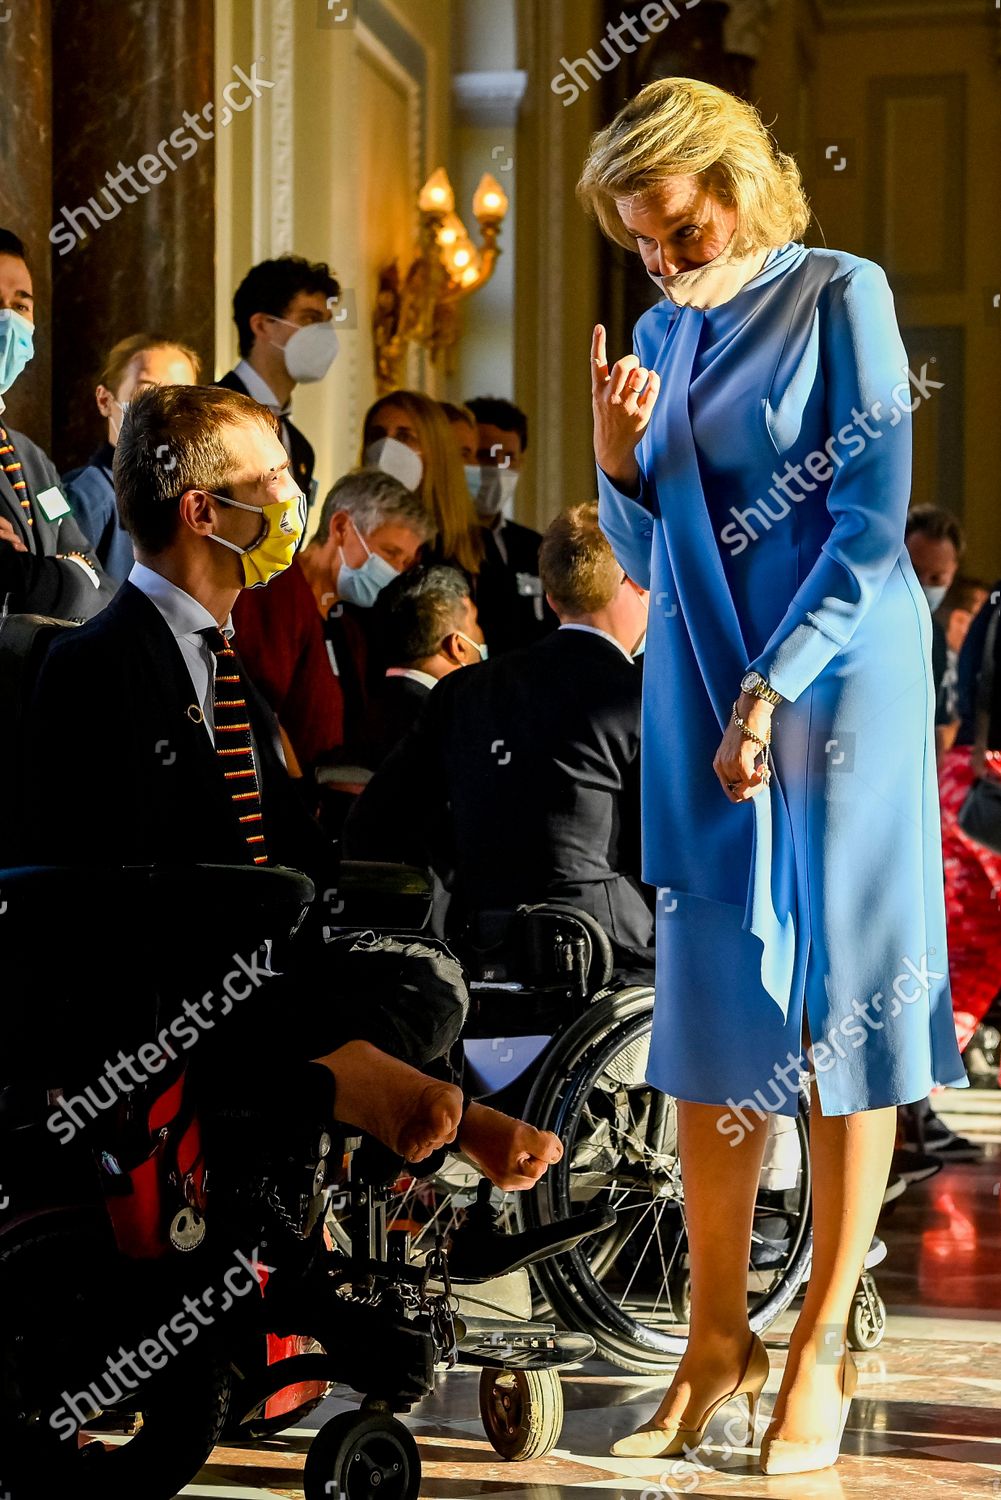 royals-reception-for-athletes-brussels-belgium-shutterstock-editorial-12578025w.jpg